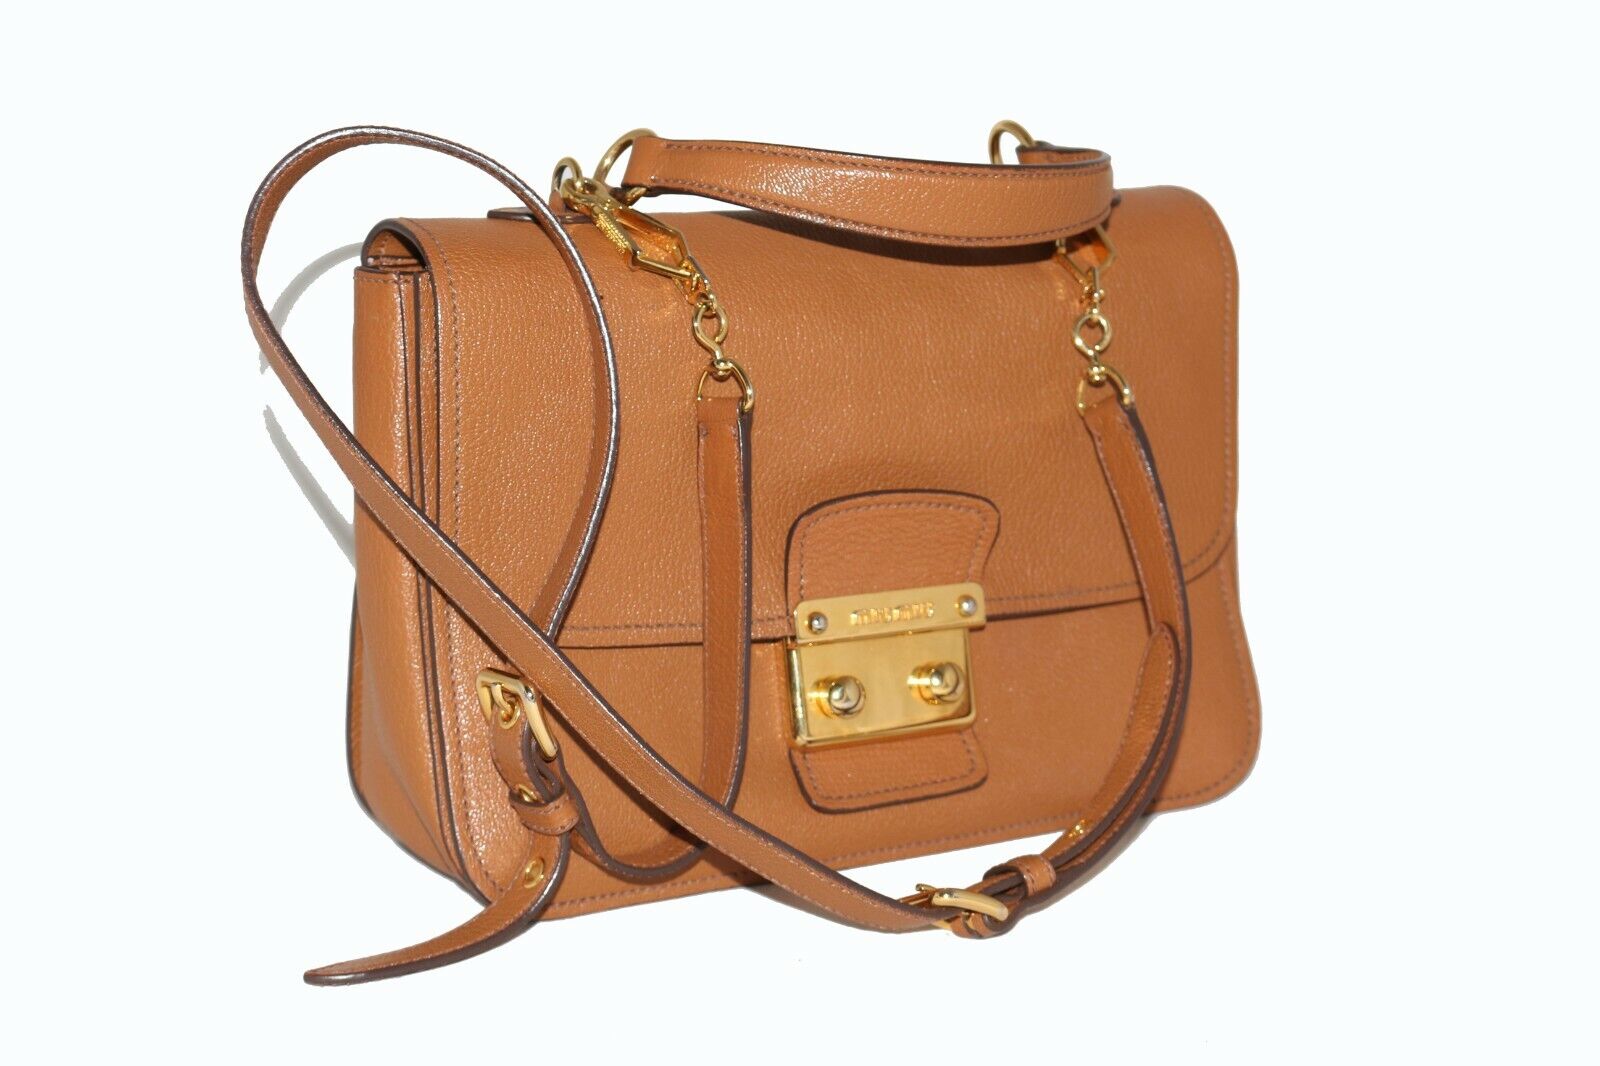 miu miu brown leather handbag with strap cross shoulder bag with GHW